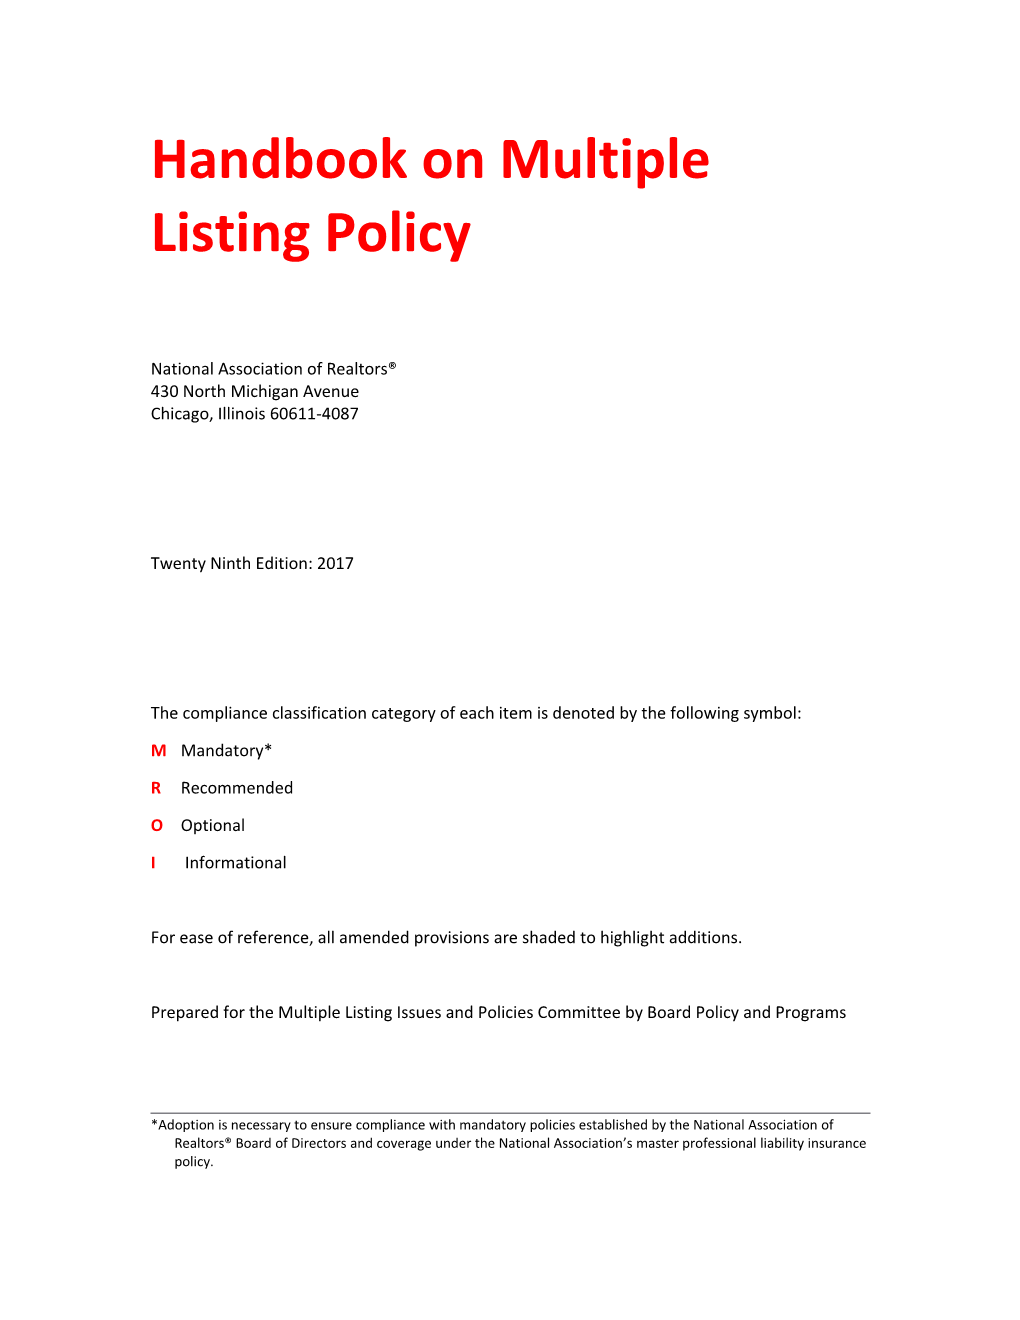 Handboo K on Multiple Listing Policy